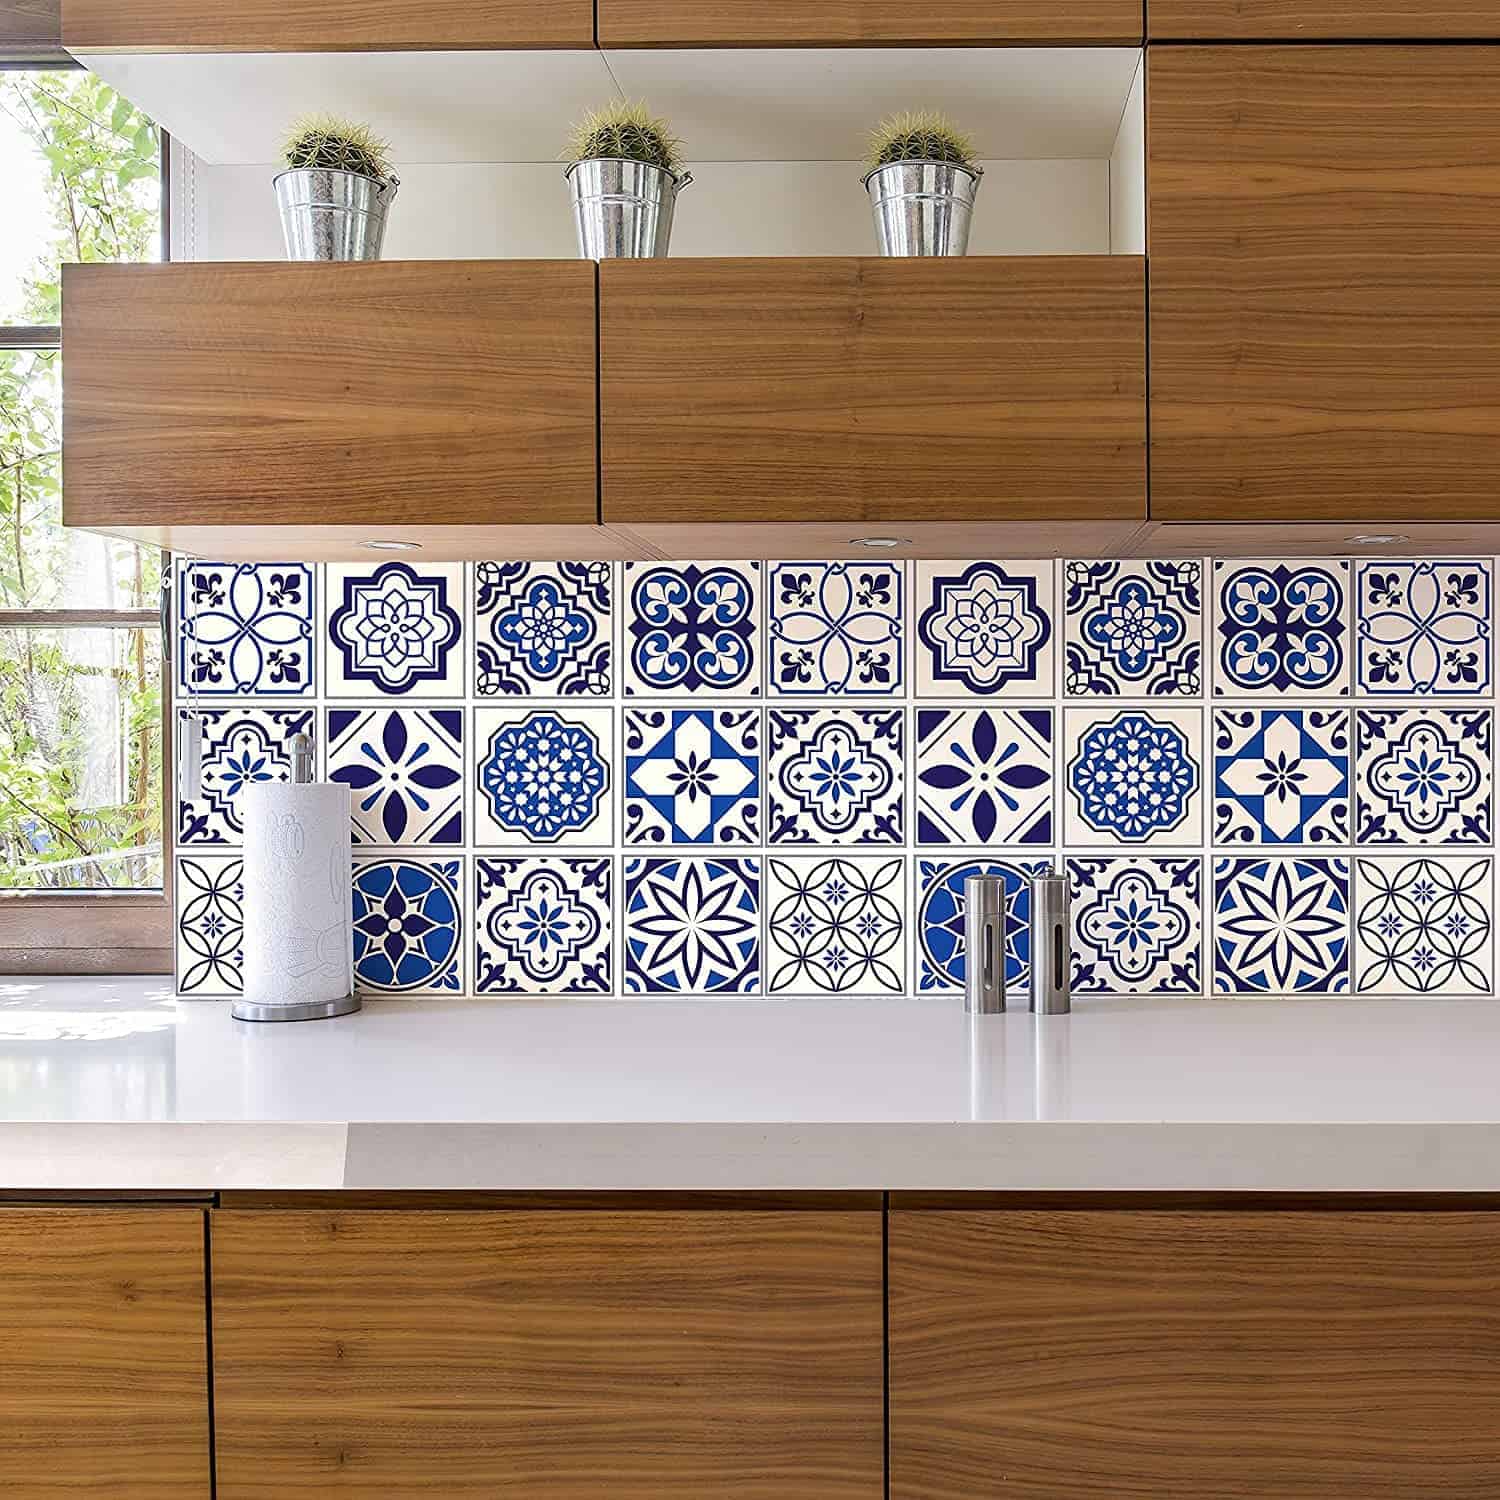 blue and white moroccan tiles for kitchen backsplash, subway tiles, kitchen wall tiles design